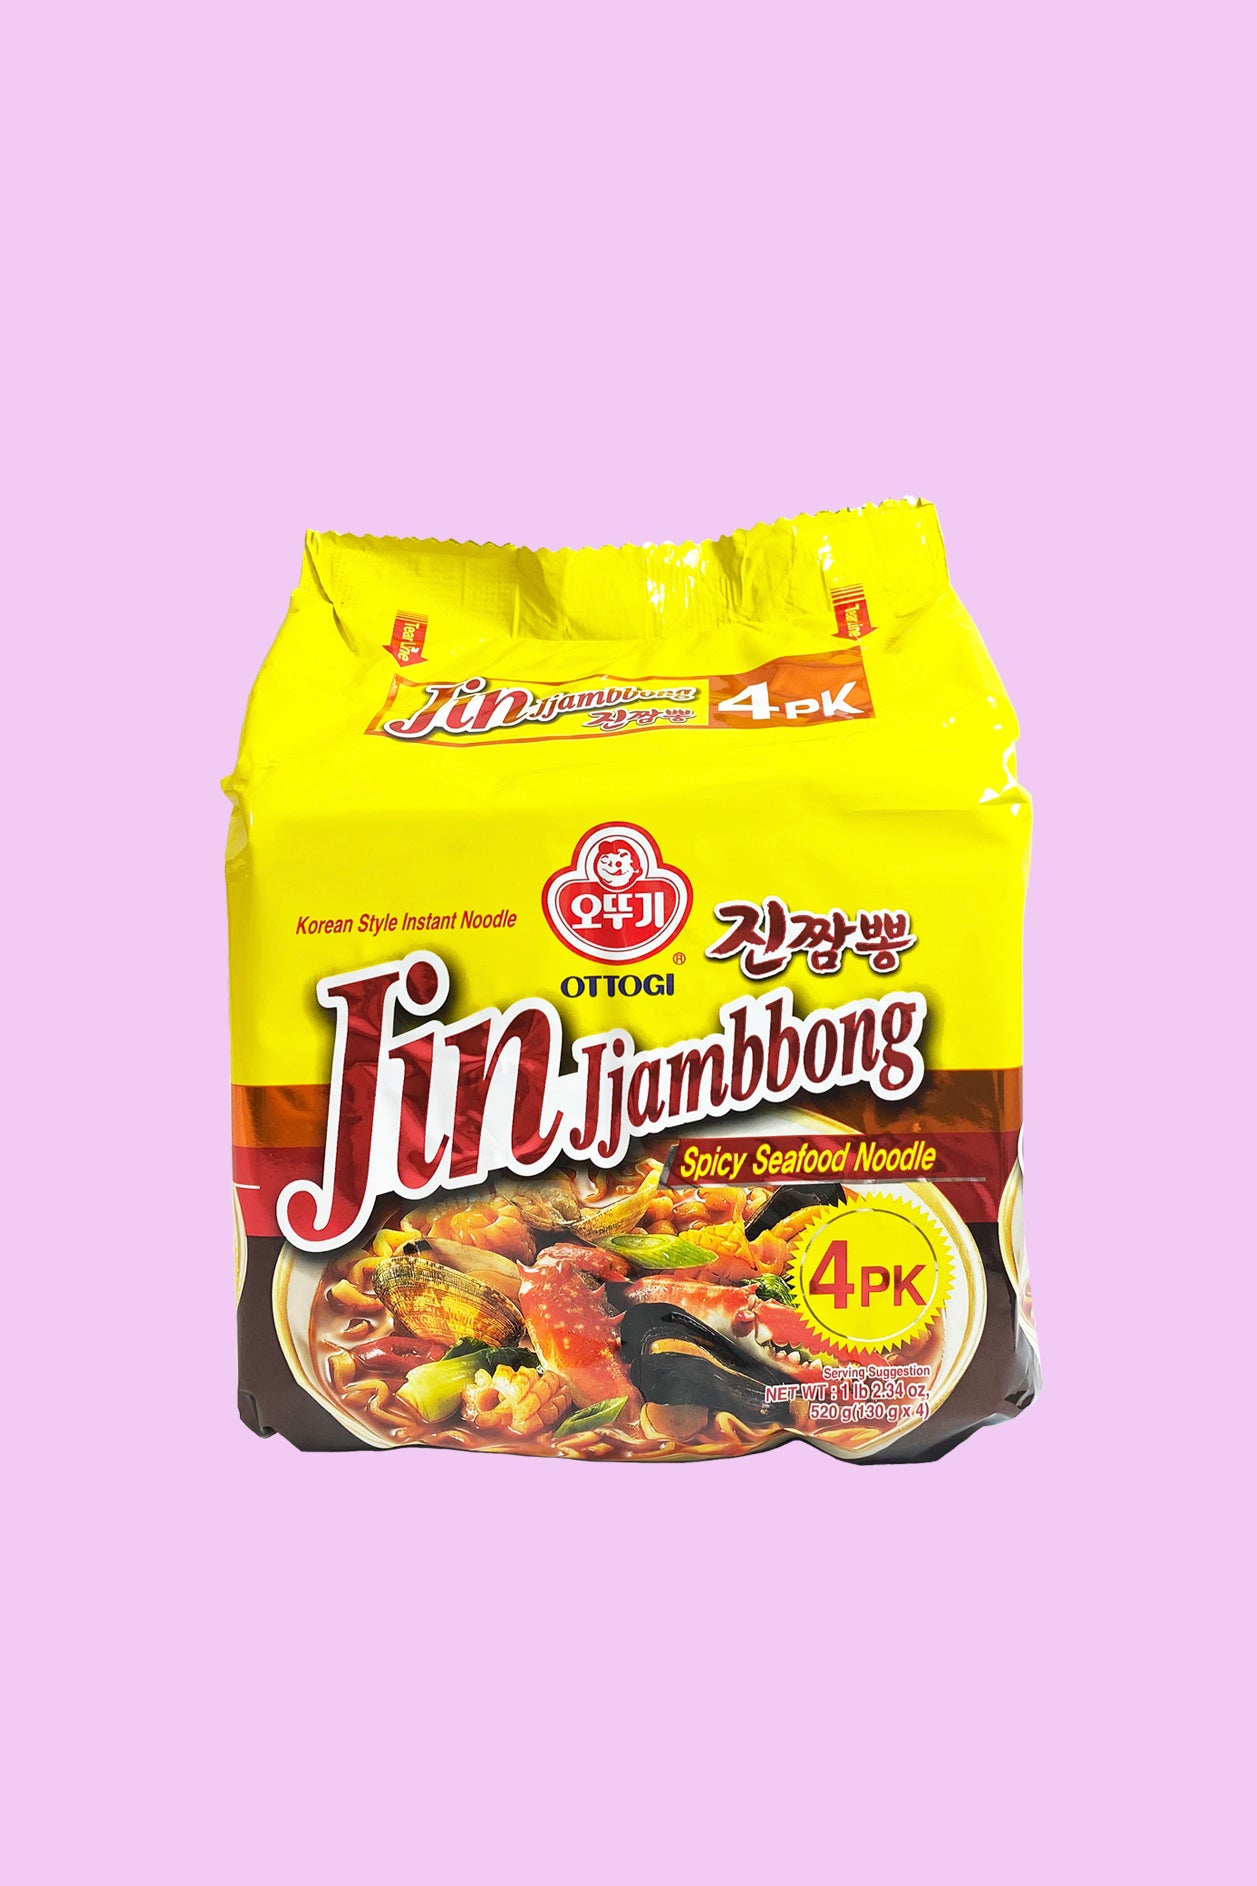 *Jin Jjambbong Spicy Seafood Noodle 4PK